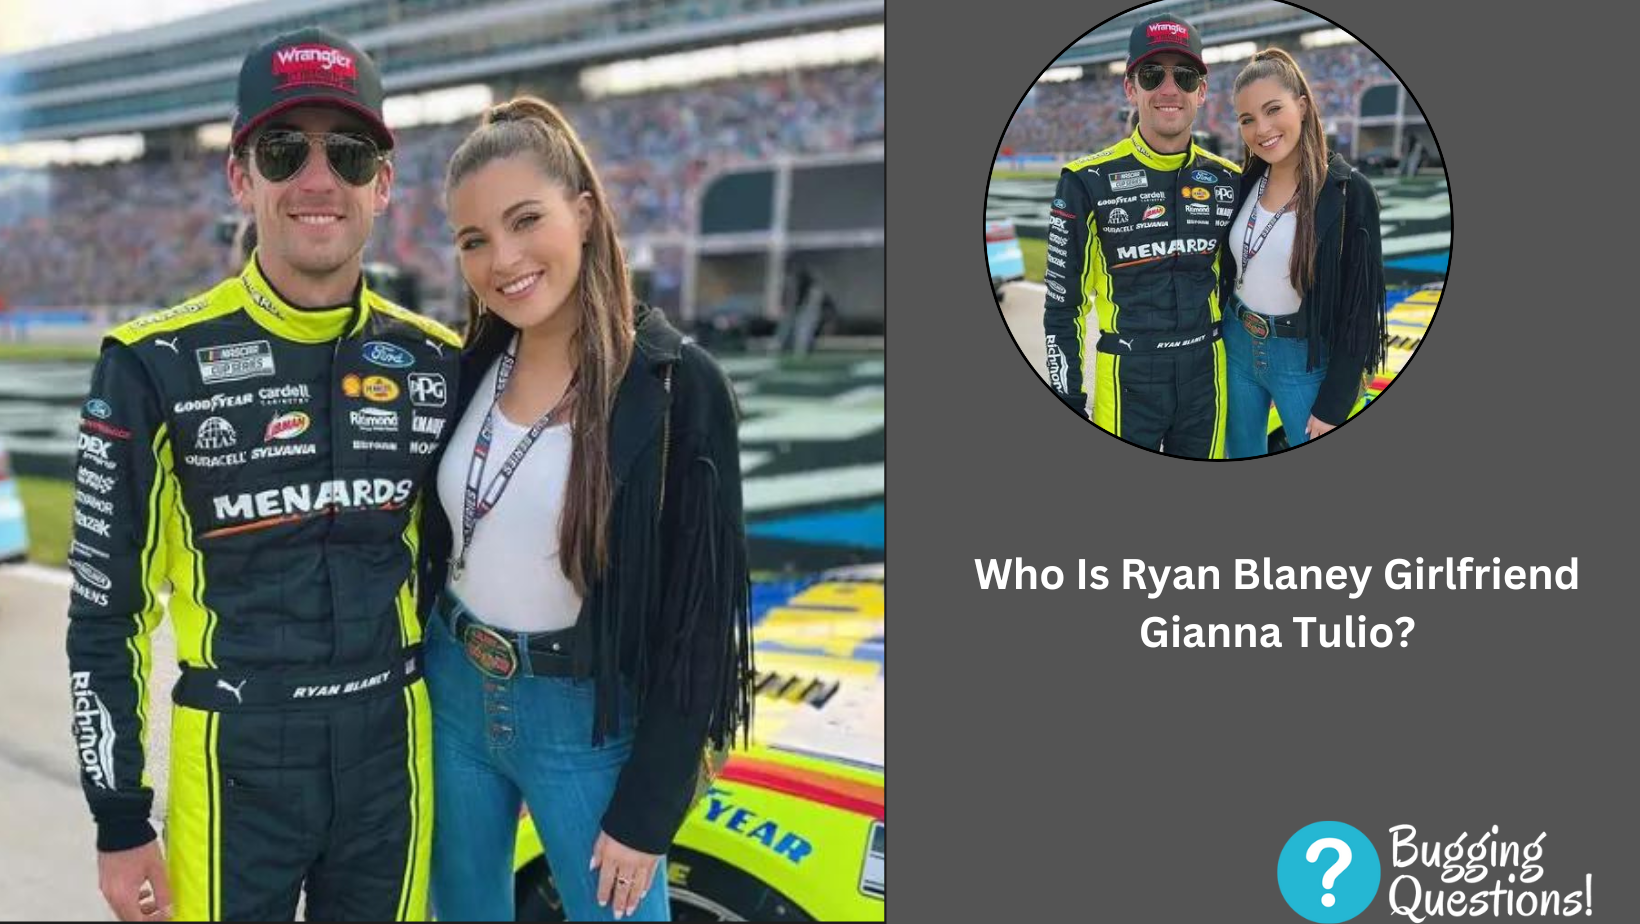 Who Is Ryan Blaney Girlfriend Gianna Tulio?